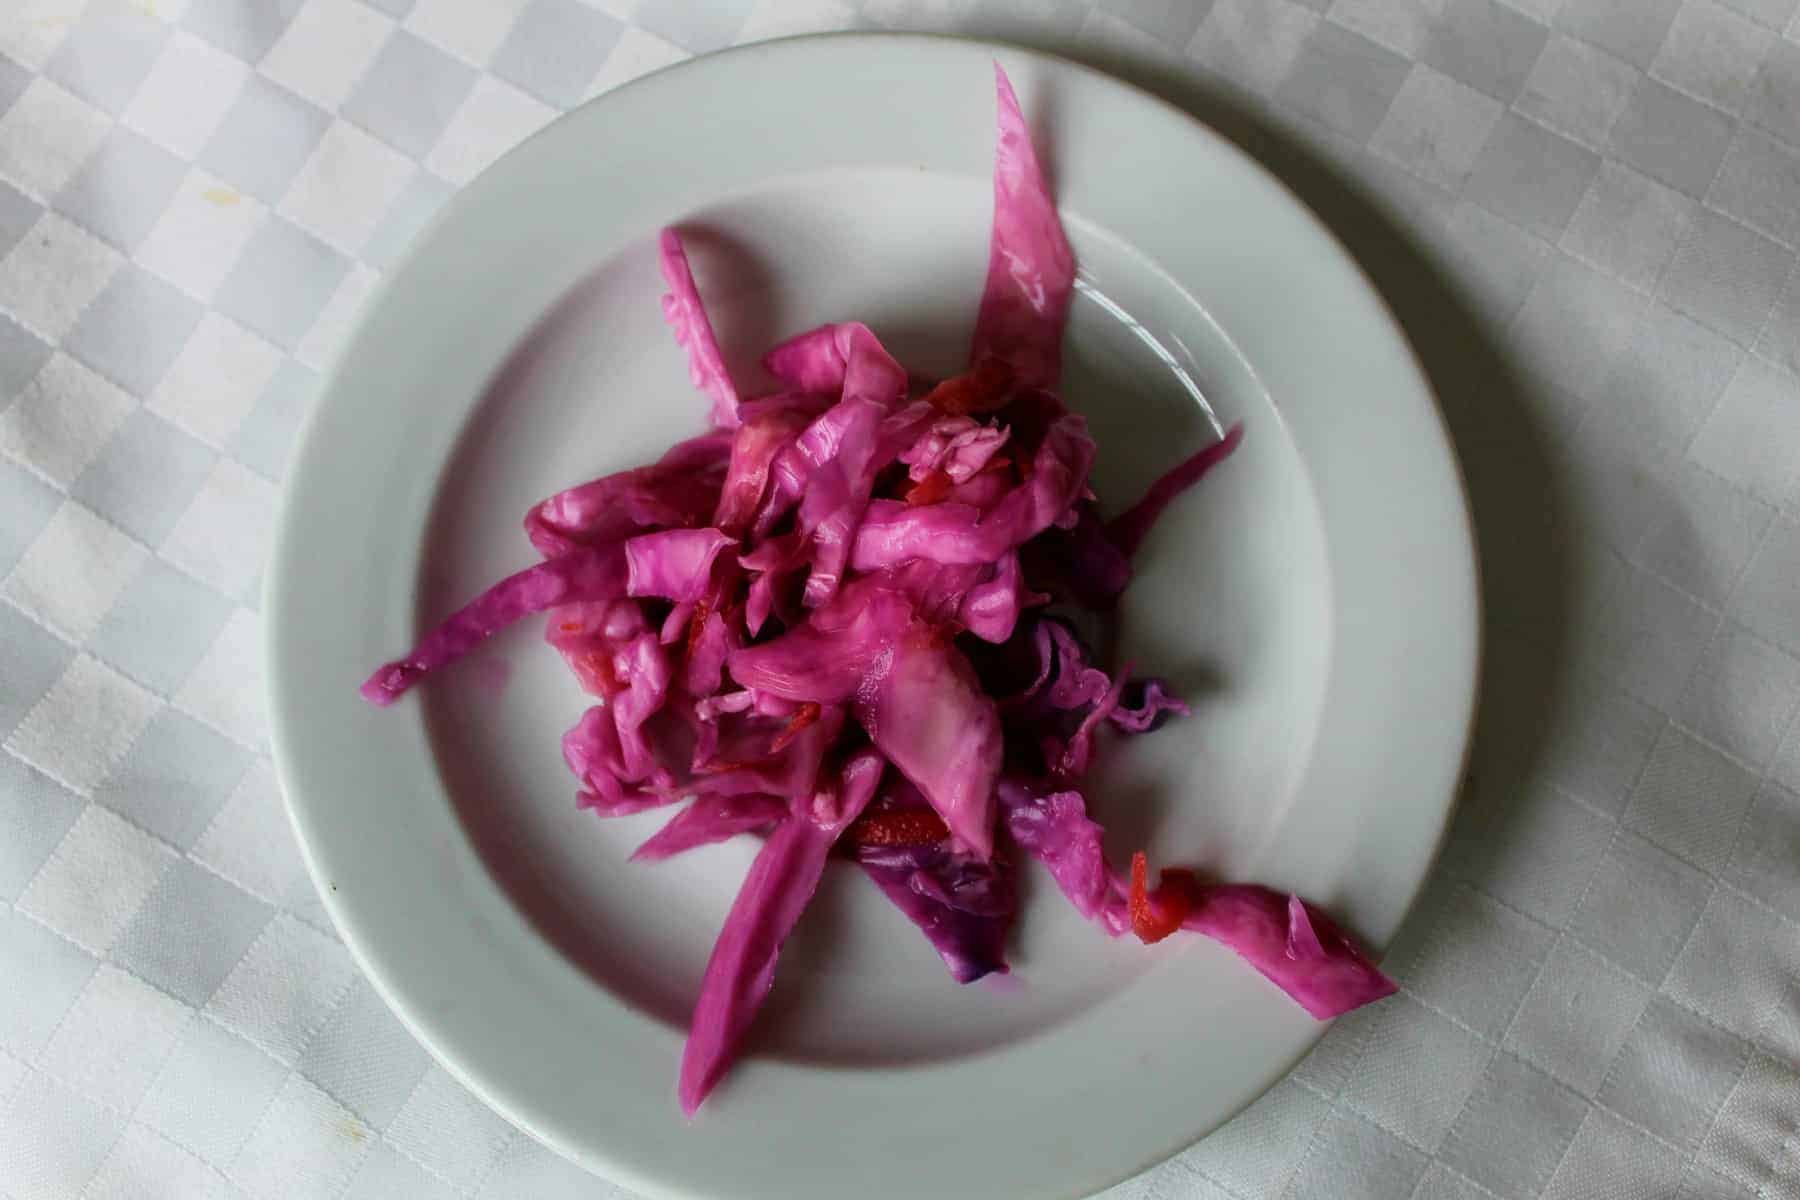 Russian quick-pickled sauerkraut with cranberries